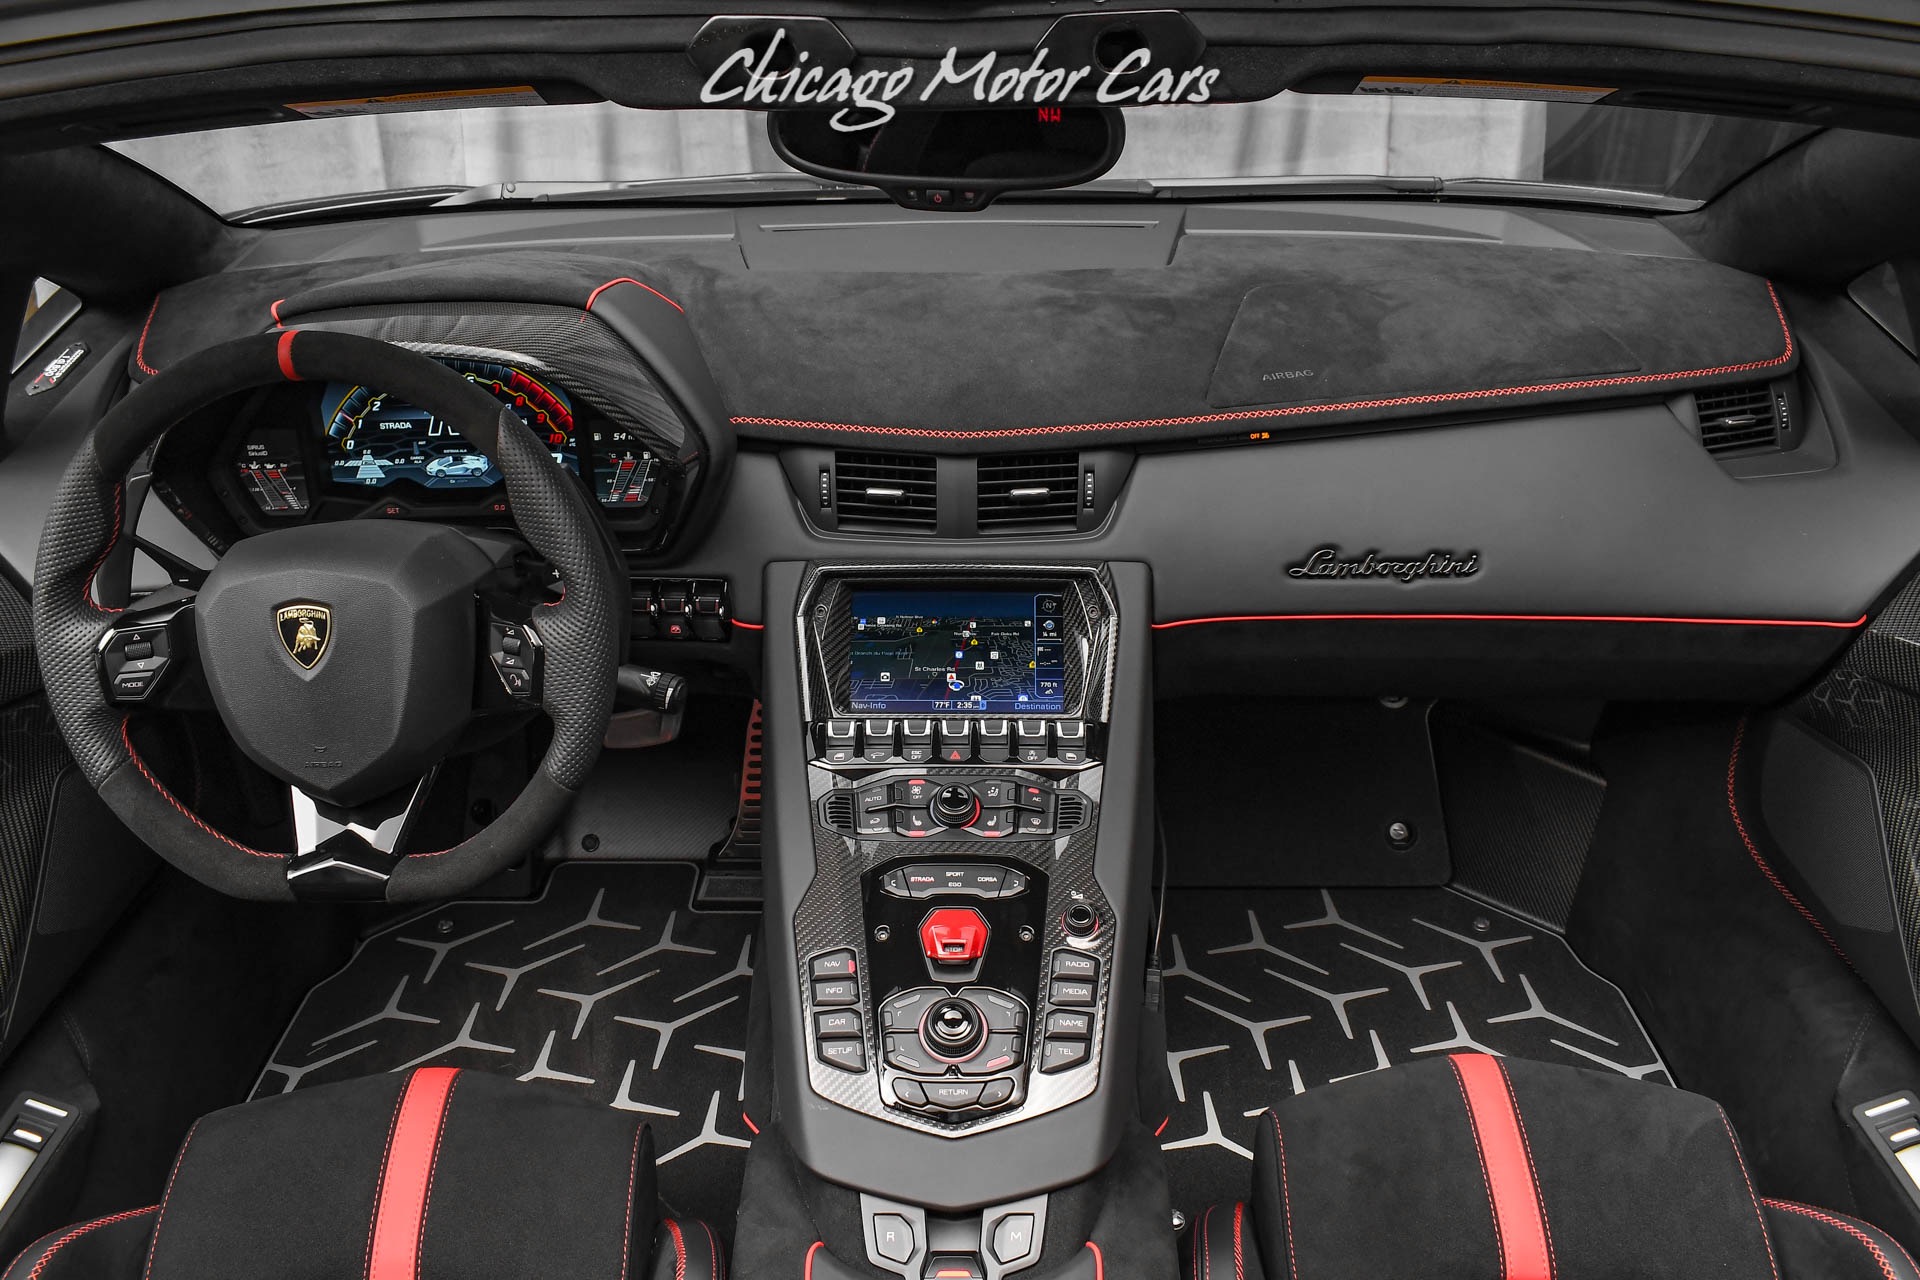 Used-2021-Lamborghini-Aventador-SVJ-Roadster-Only-1000-Miles-Carbon-Fiber-Full-Body-Paint-Protection-Film